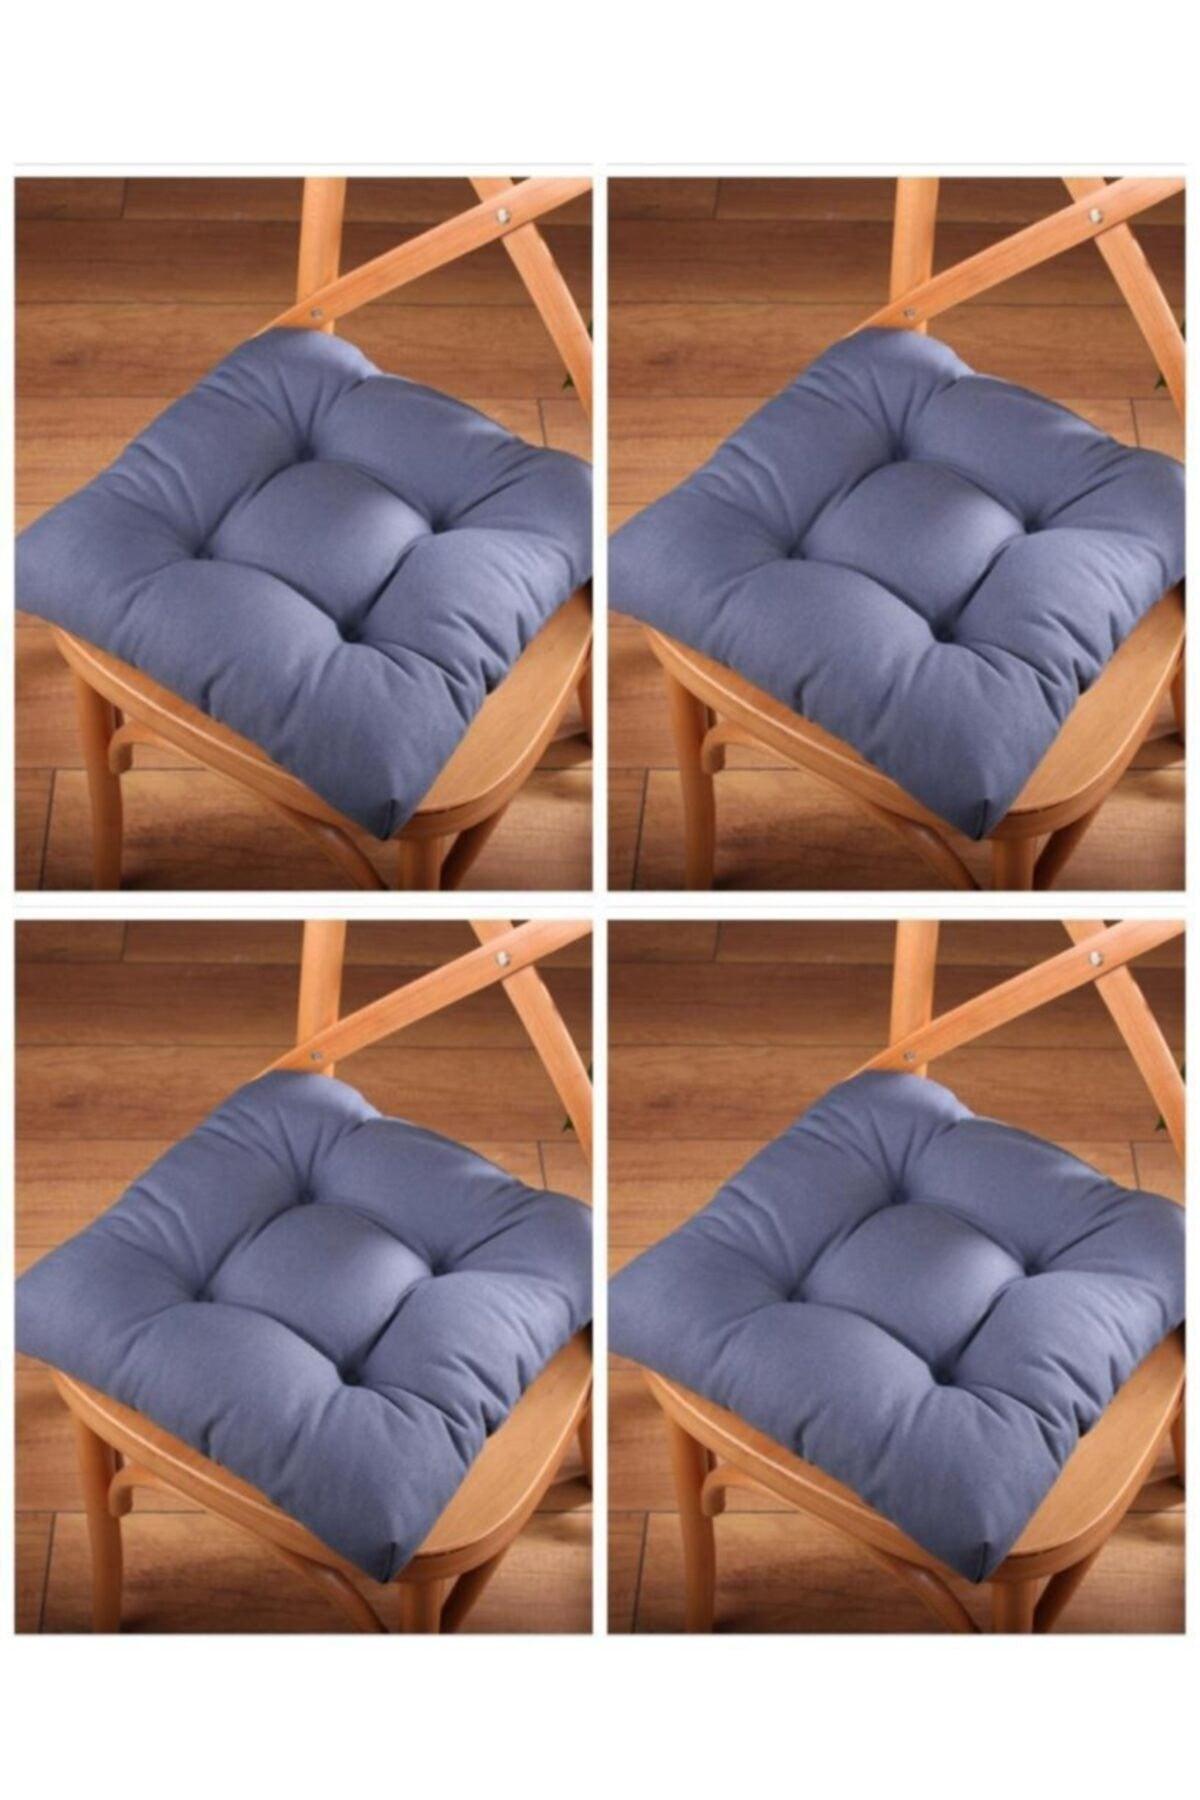 4 Pcs Lux Pofidik Petrol Chair Cushion Special Stitched Laced 40x40cm - Swordslife